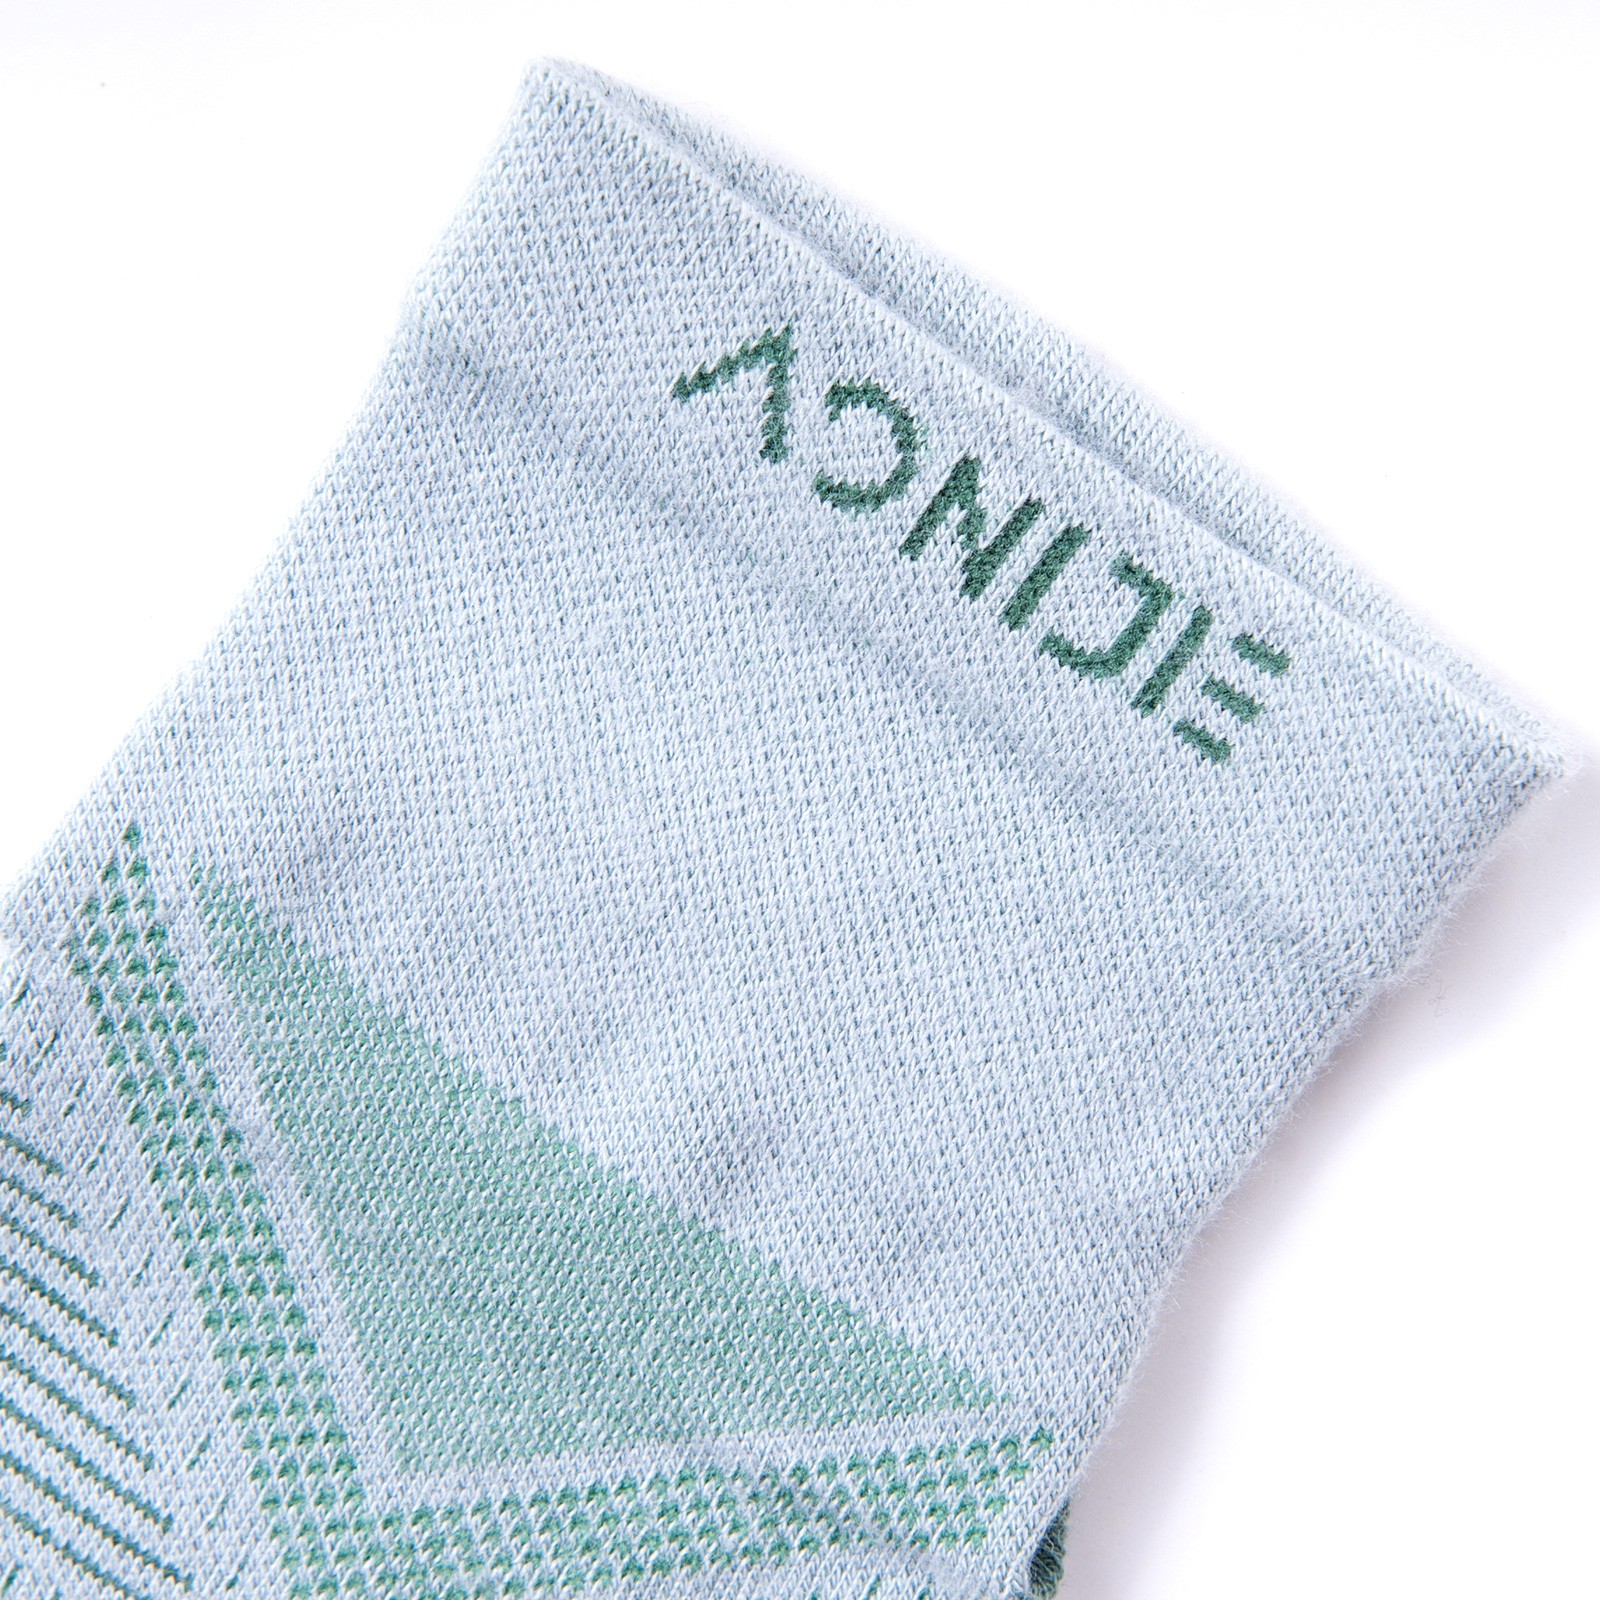 AONIJIE E4825 Running Coolmax Athletic Toe Socks 1 Pair Breathable Wear-resistant Sports Outdoor Hiking Walking Fve-finger Socks